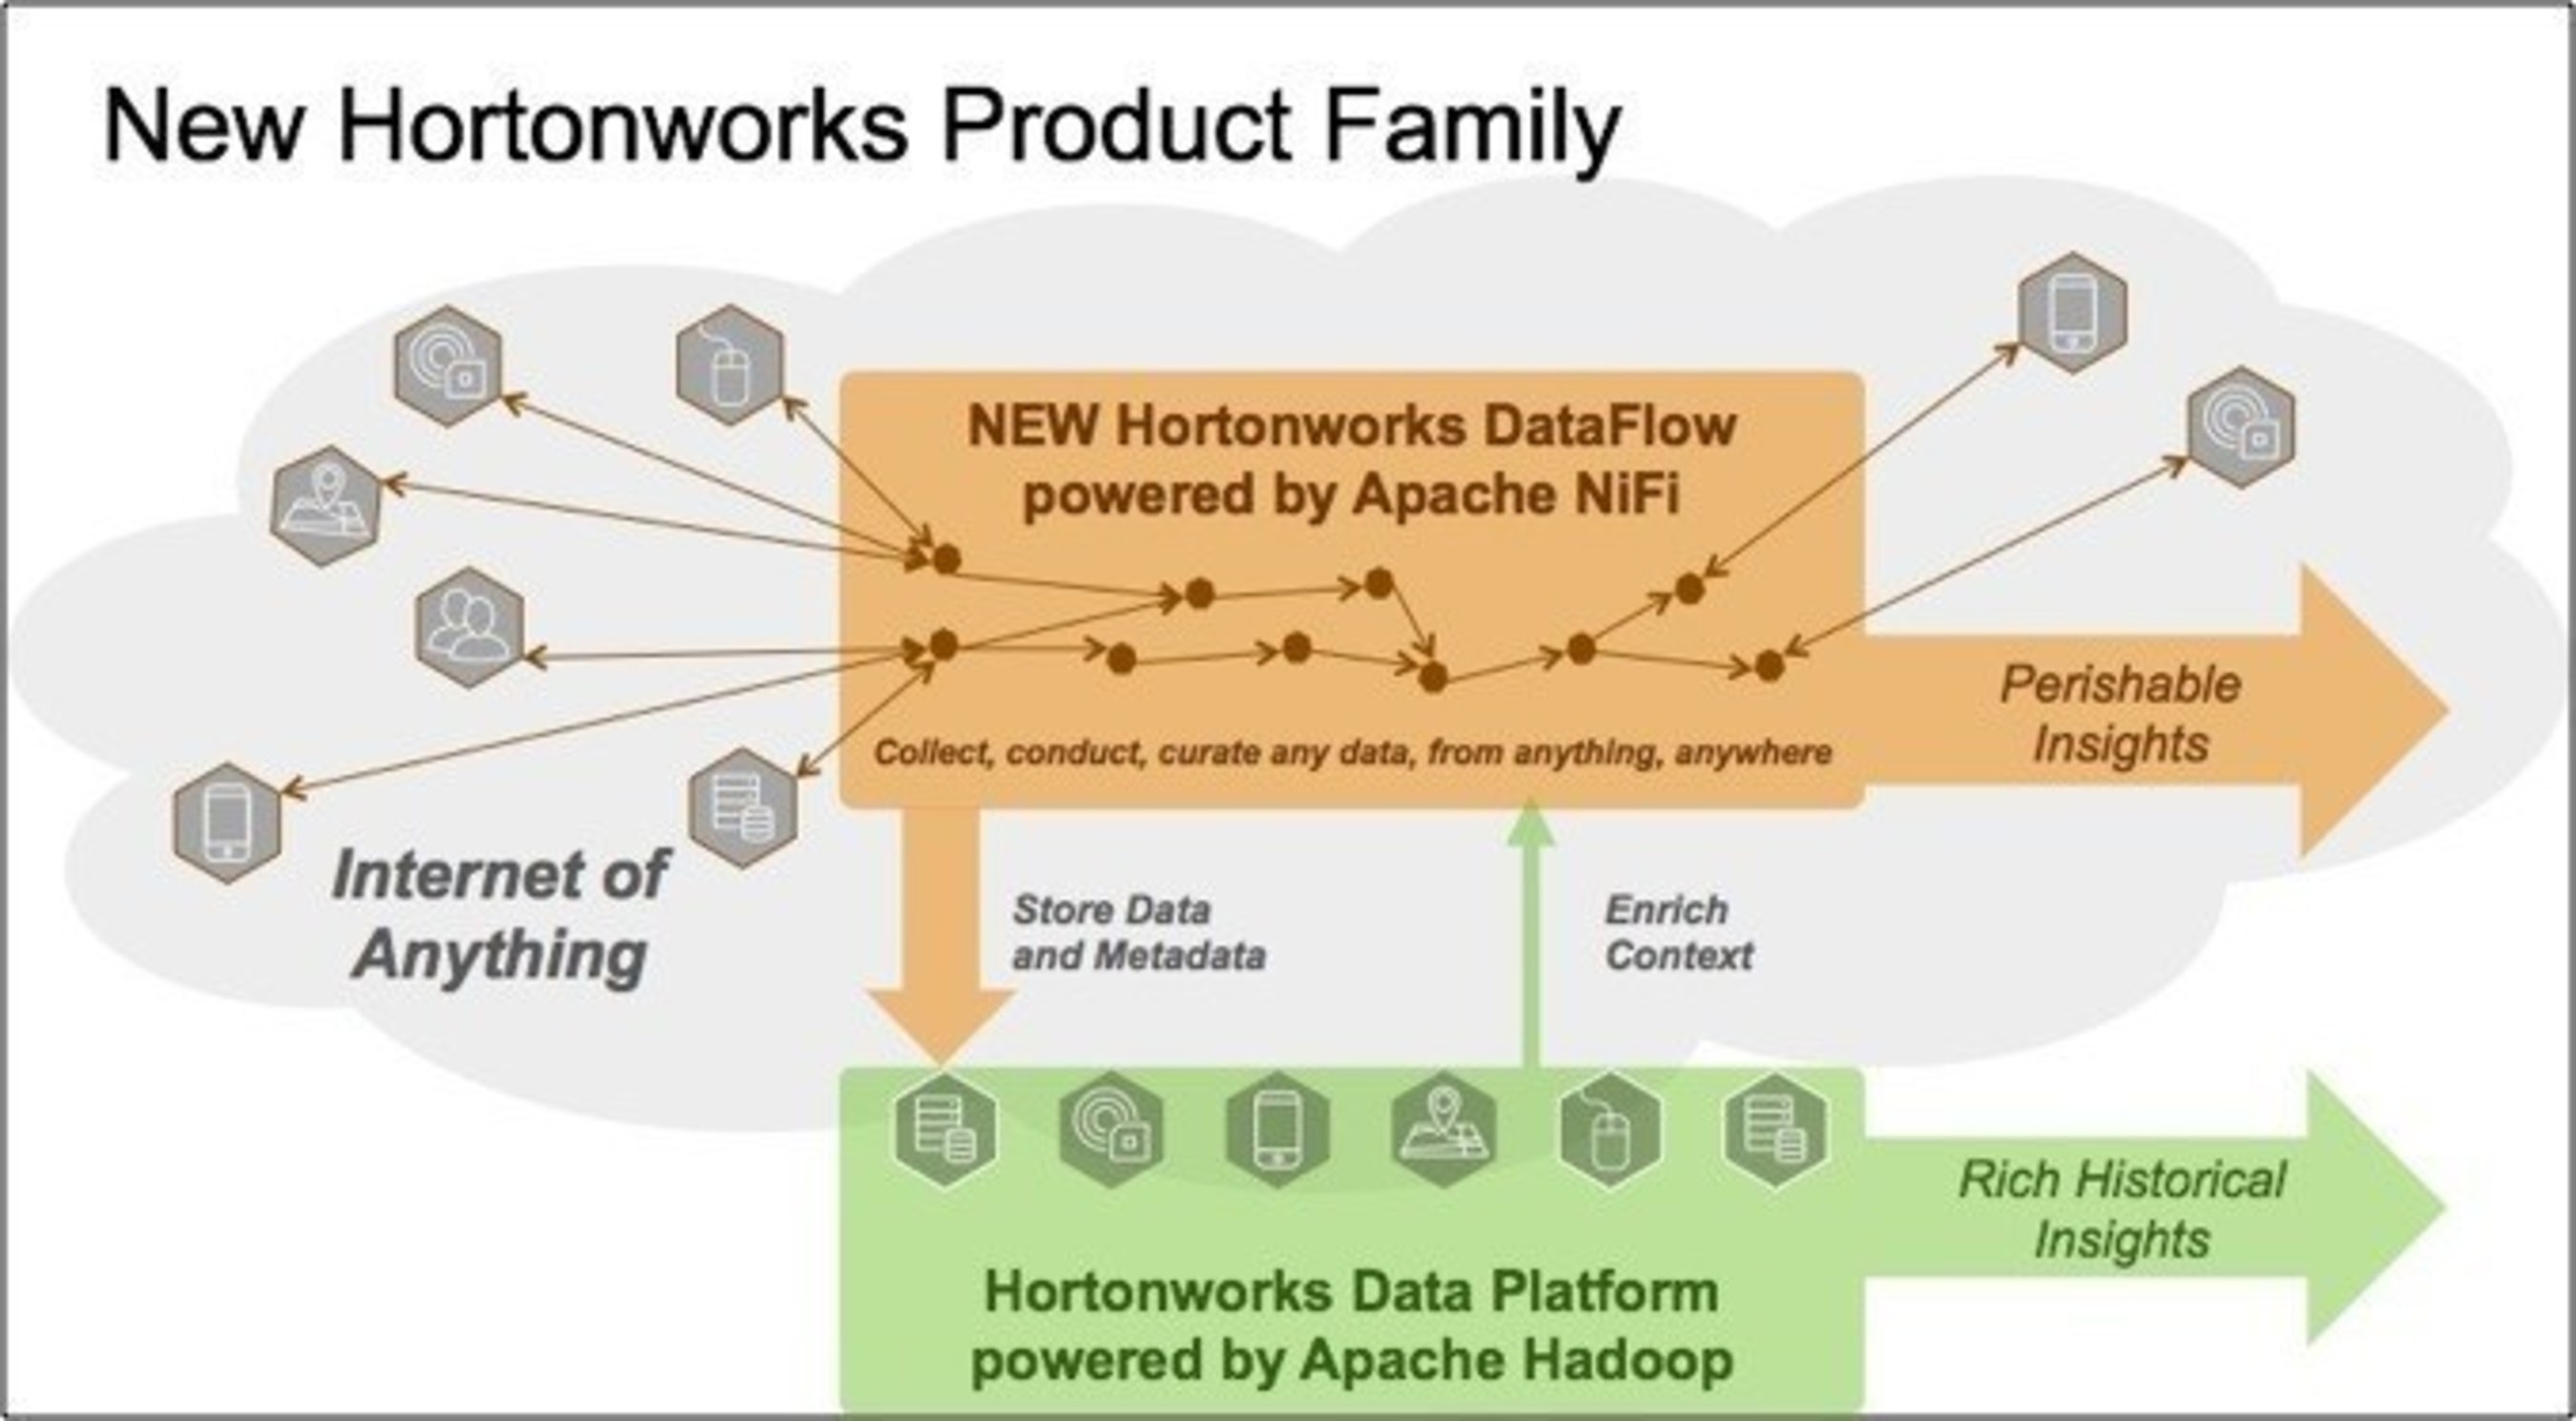 Hortonworks DataFlow complements Hortonworks Data Platform